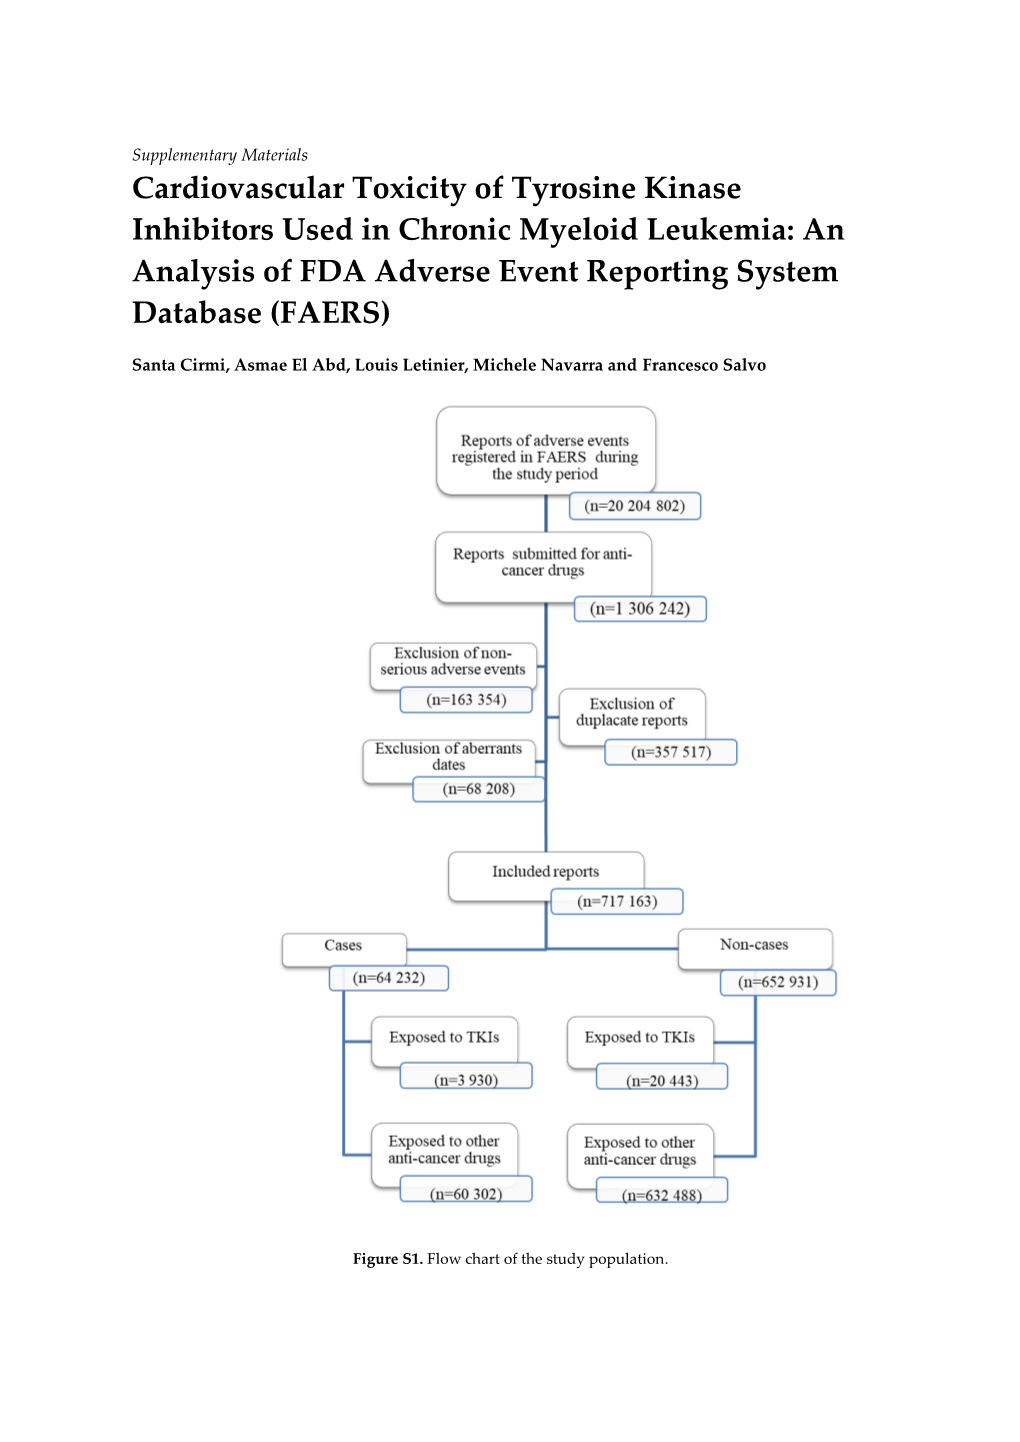 Cardiovascular Toxicity of Tyrosine Kinase Inhibitors Used in Chronic Myeloid Leukemia: an Analysis of FDA Adverse Event Reporting System Database (FAERS)